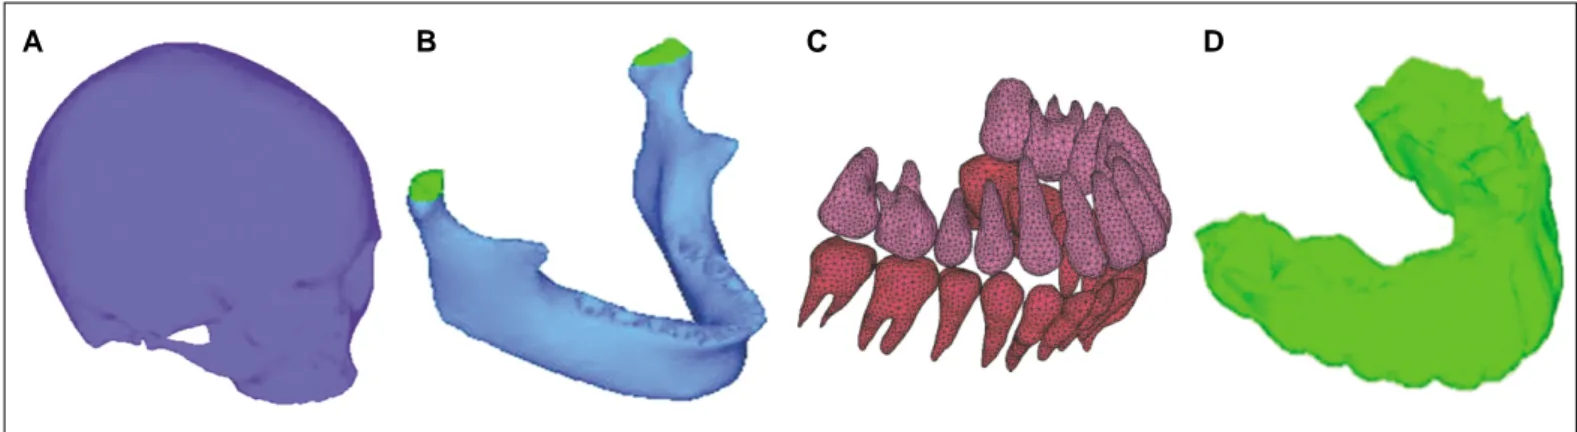 Fig. 1. Finite element model. A: Skull &amp; Maxillae, B: Mandible, C: Teeth, D: Mouthguard.